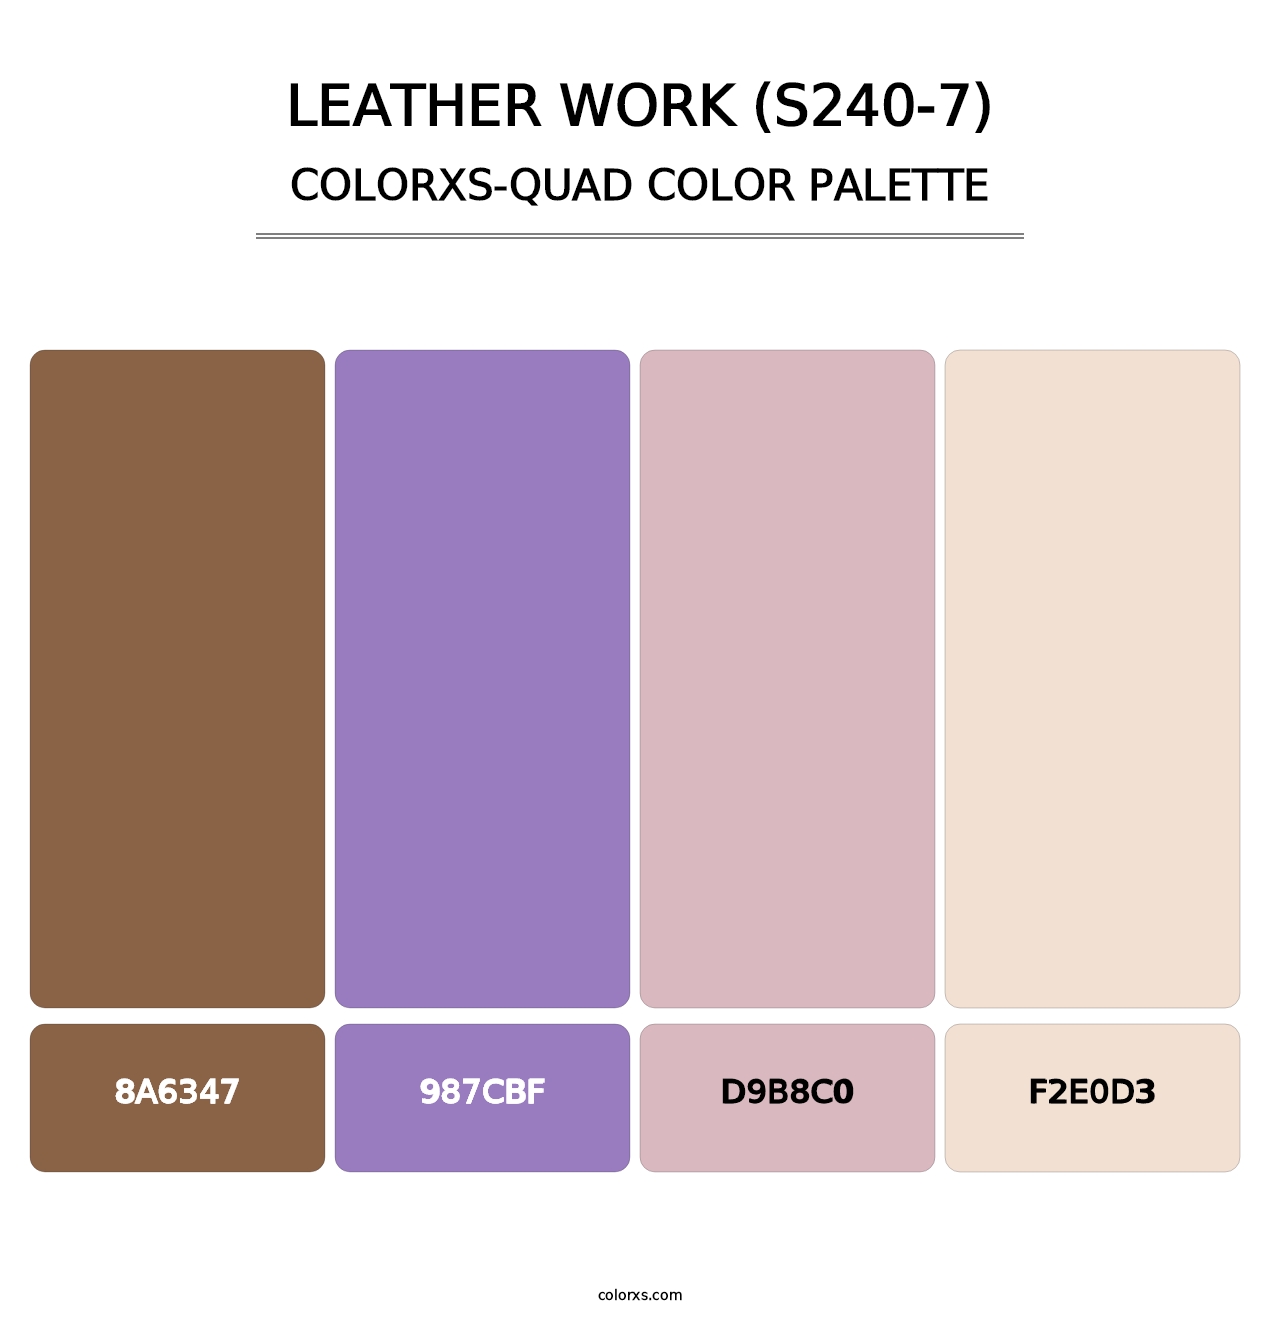 Leather Work (S240-7) - Colorxs Quad Palette